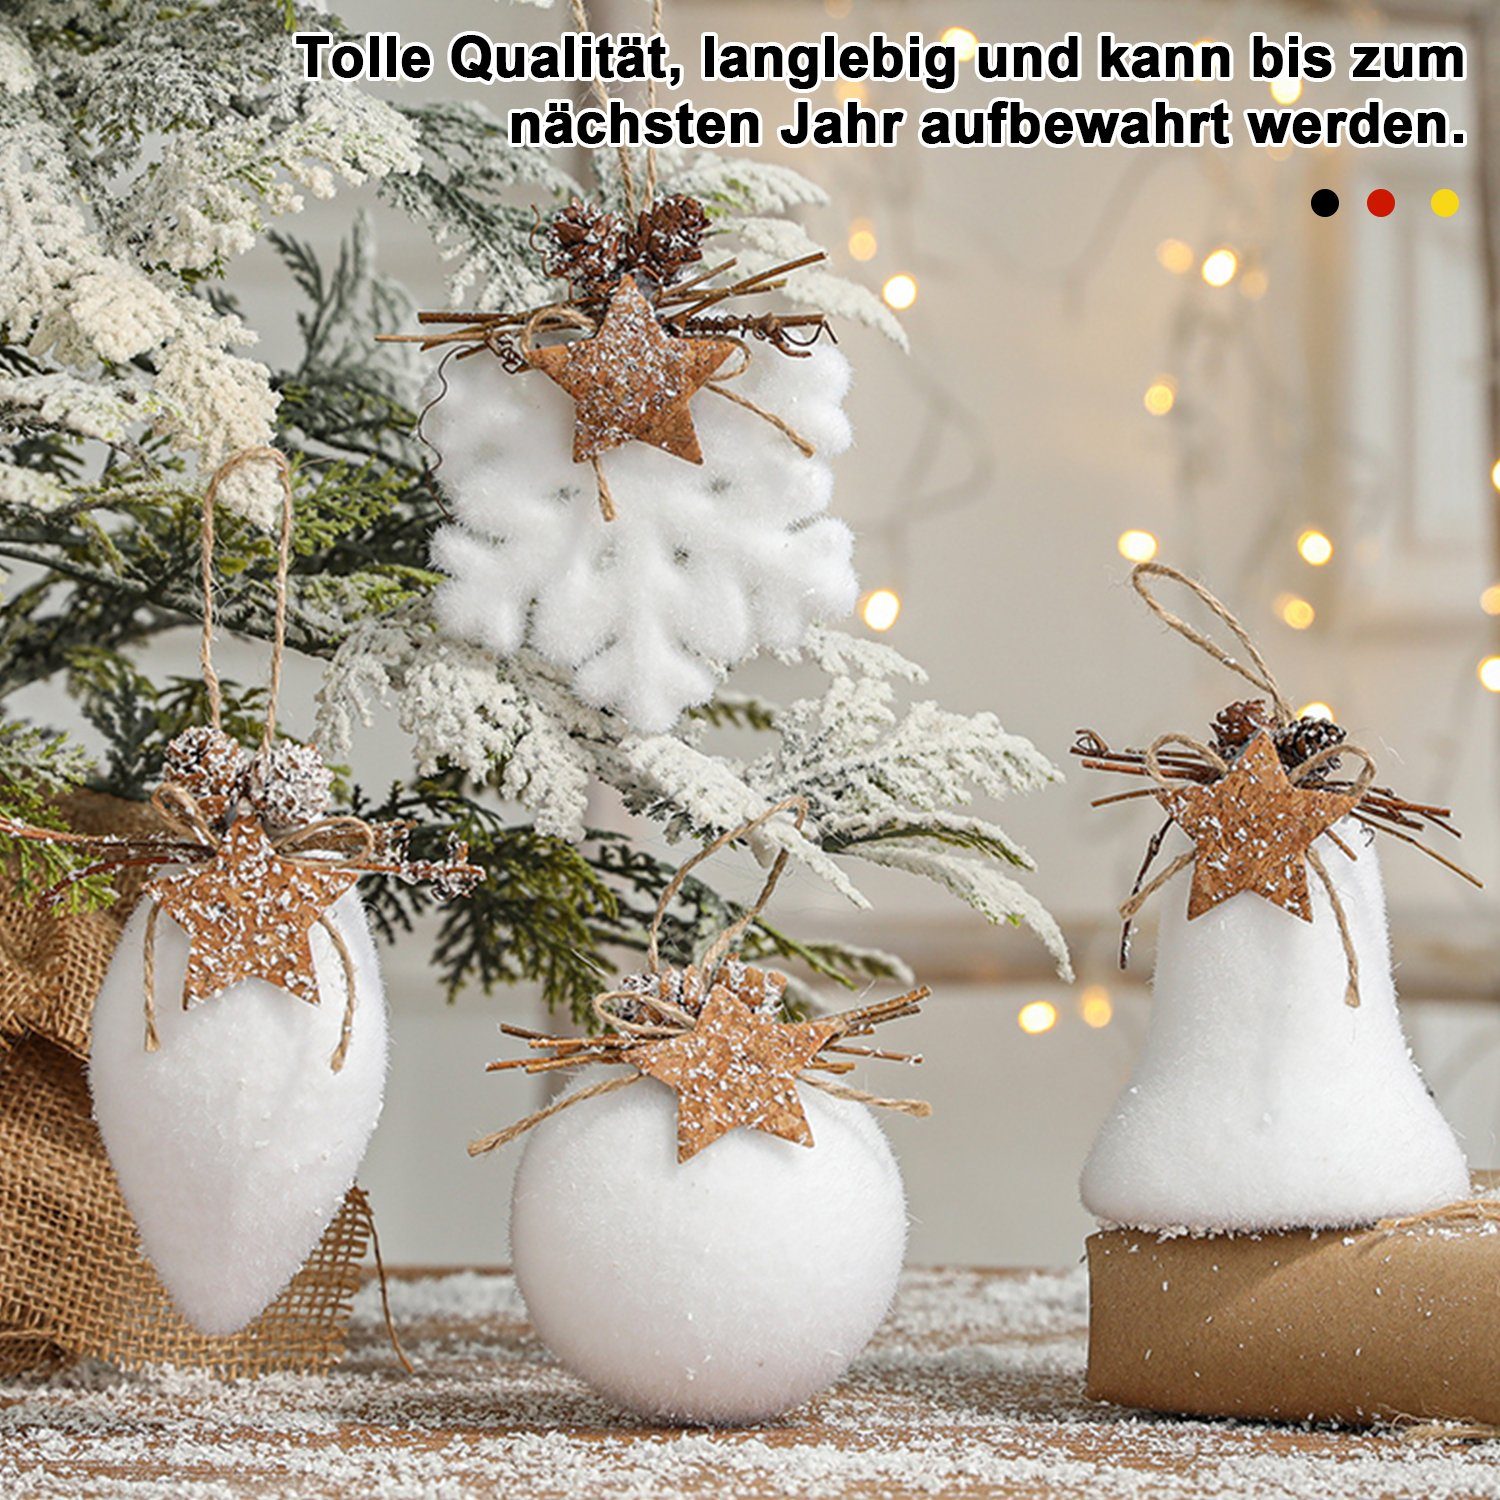 MAGICSHE Christbaumschmuck Weihnachtsanhänger Schaumstoff Schneeflocke (1-tlg)